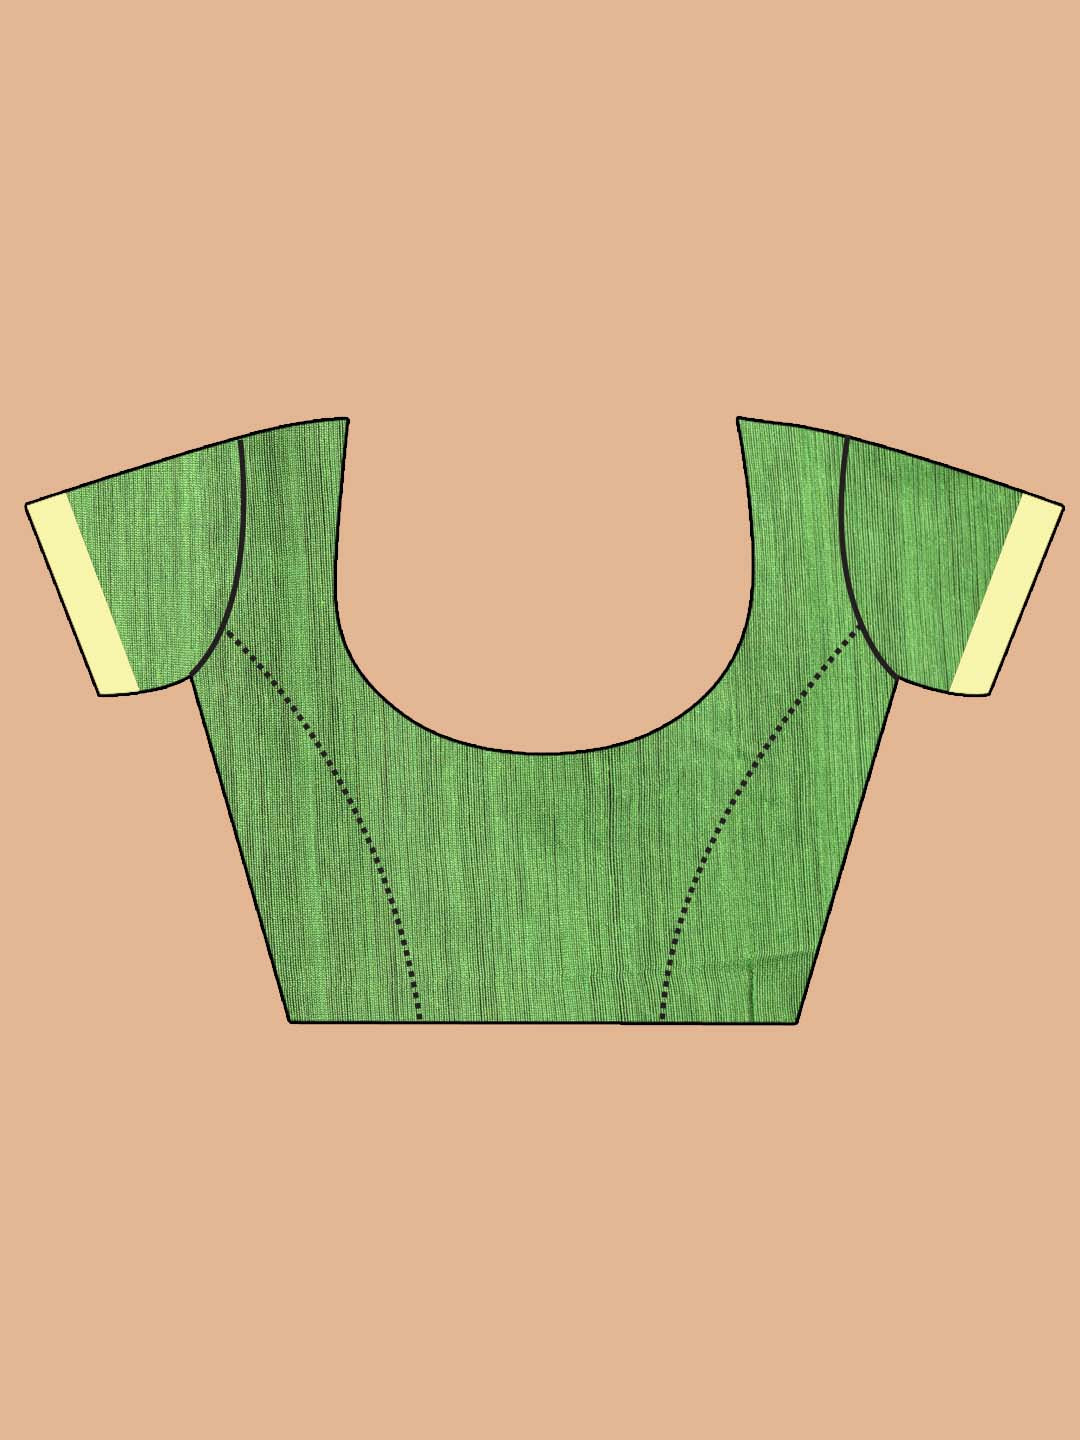 Indethnic Green Bengal Handloom Cotton Blend Work Saree - Blouse Piece View